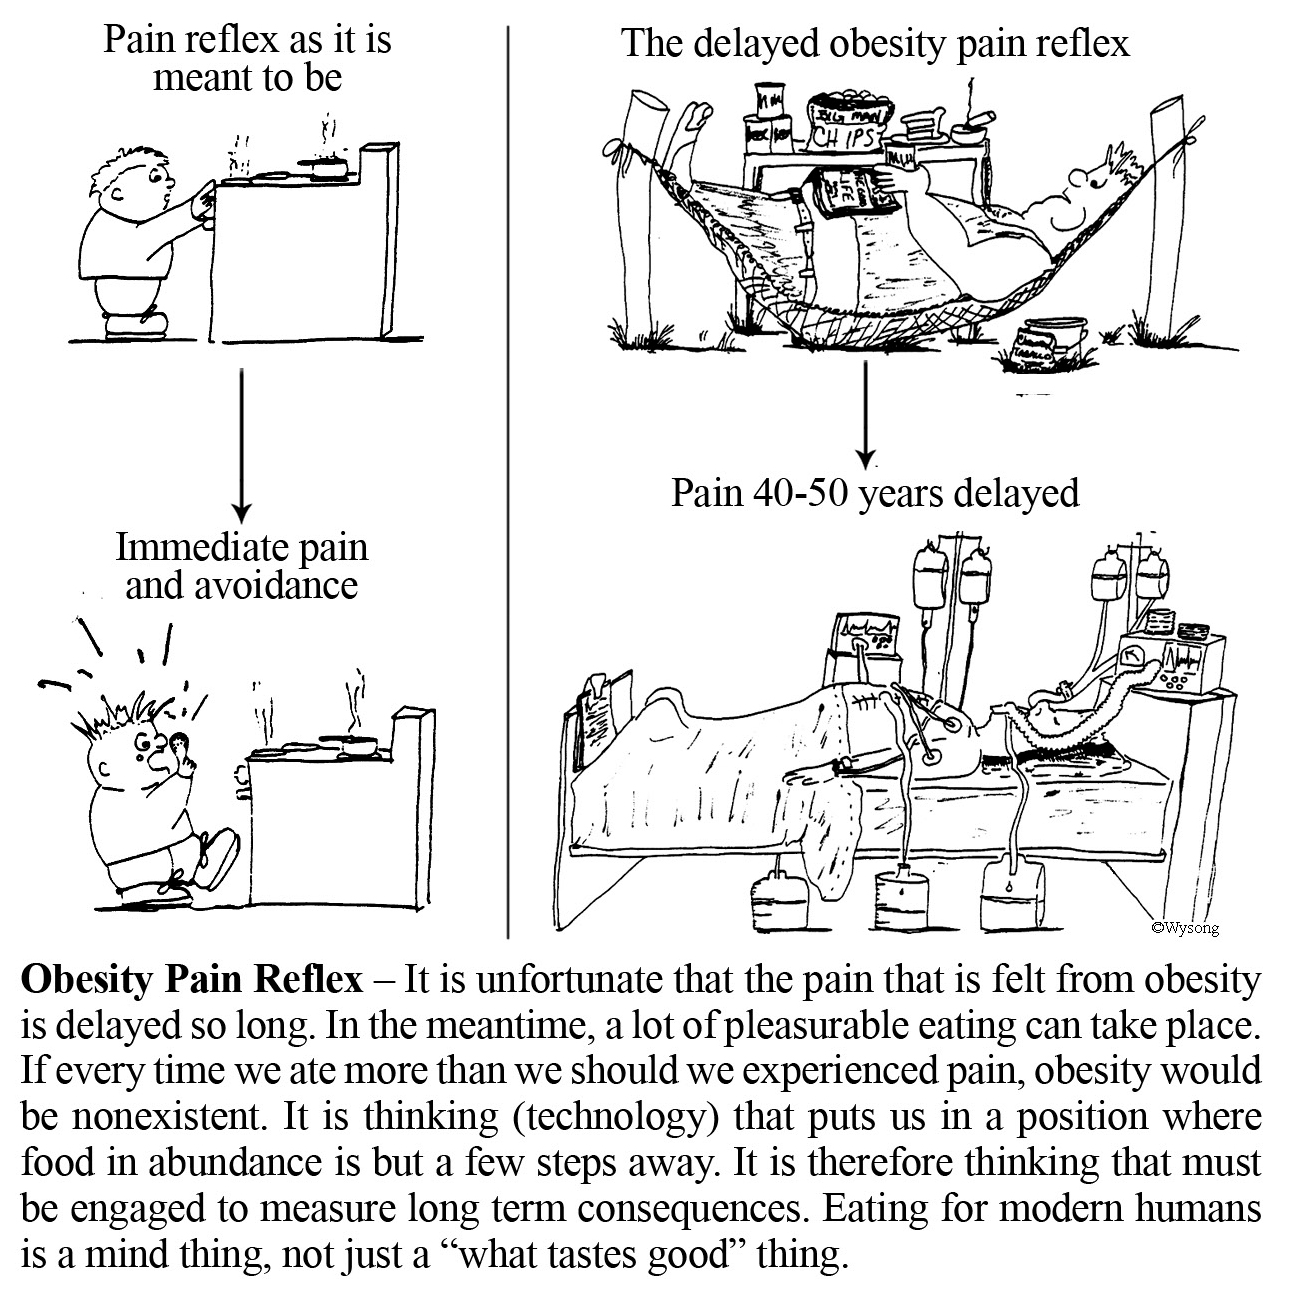 Obesity Pain Reflex